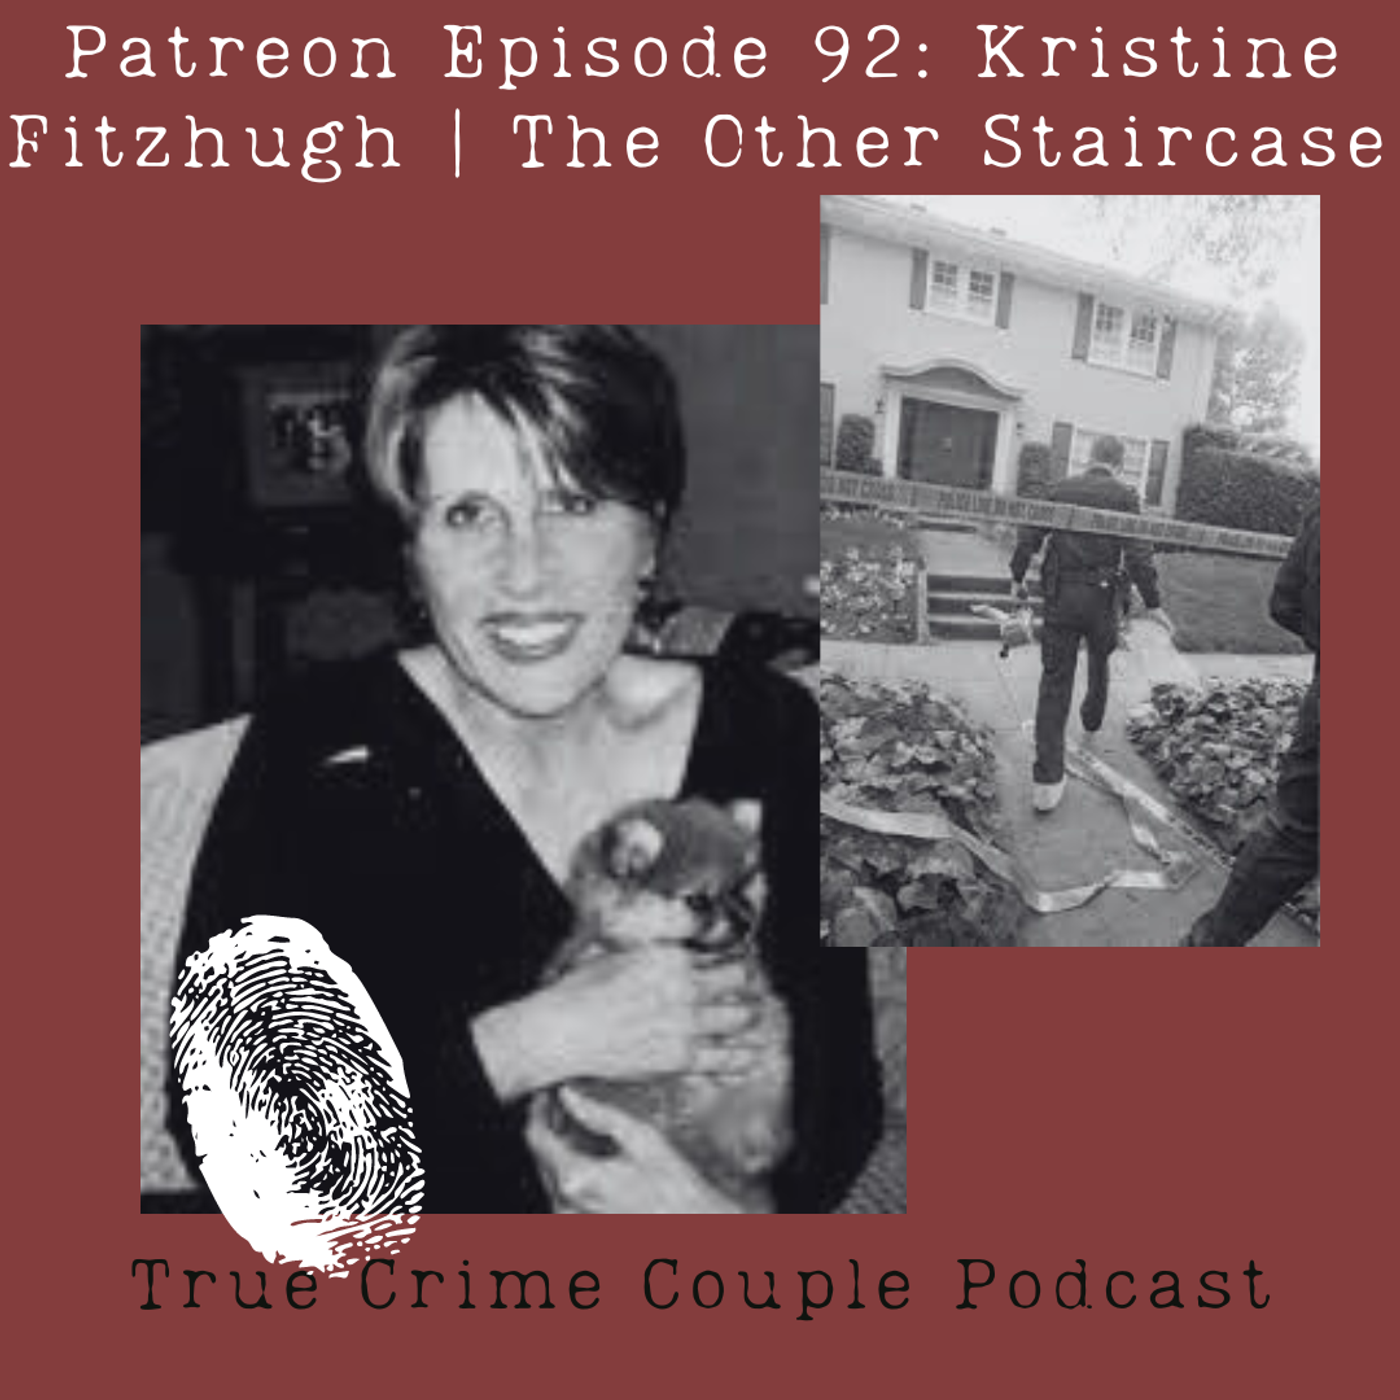 BONUS Episode: Patreon Episode 92: Kristine Fitzhugh | The Other Staircase